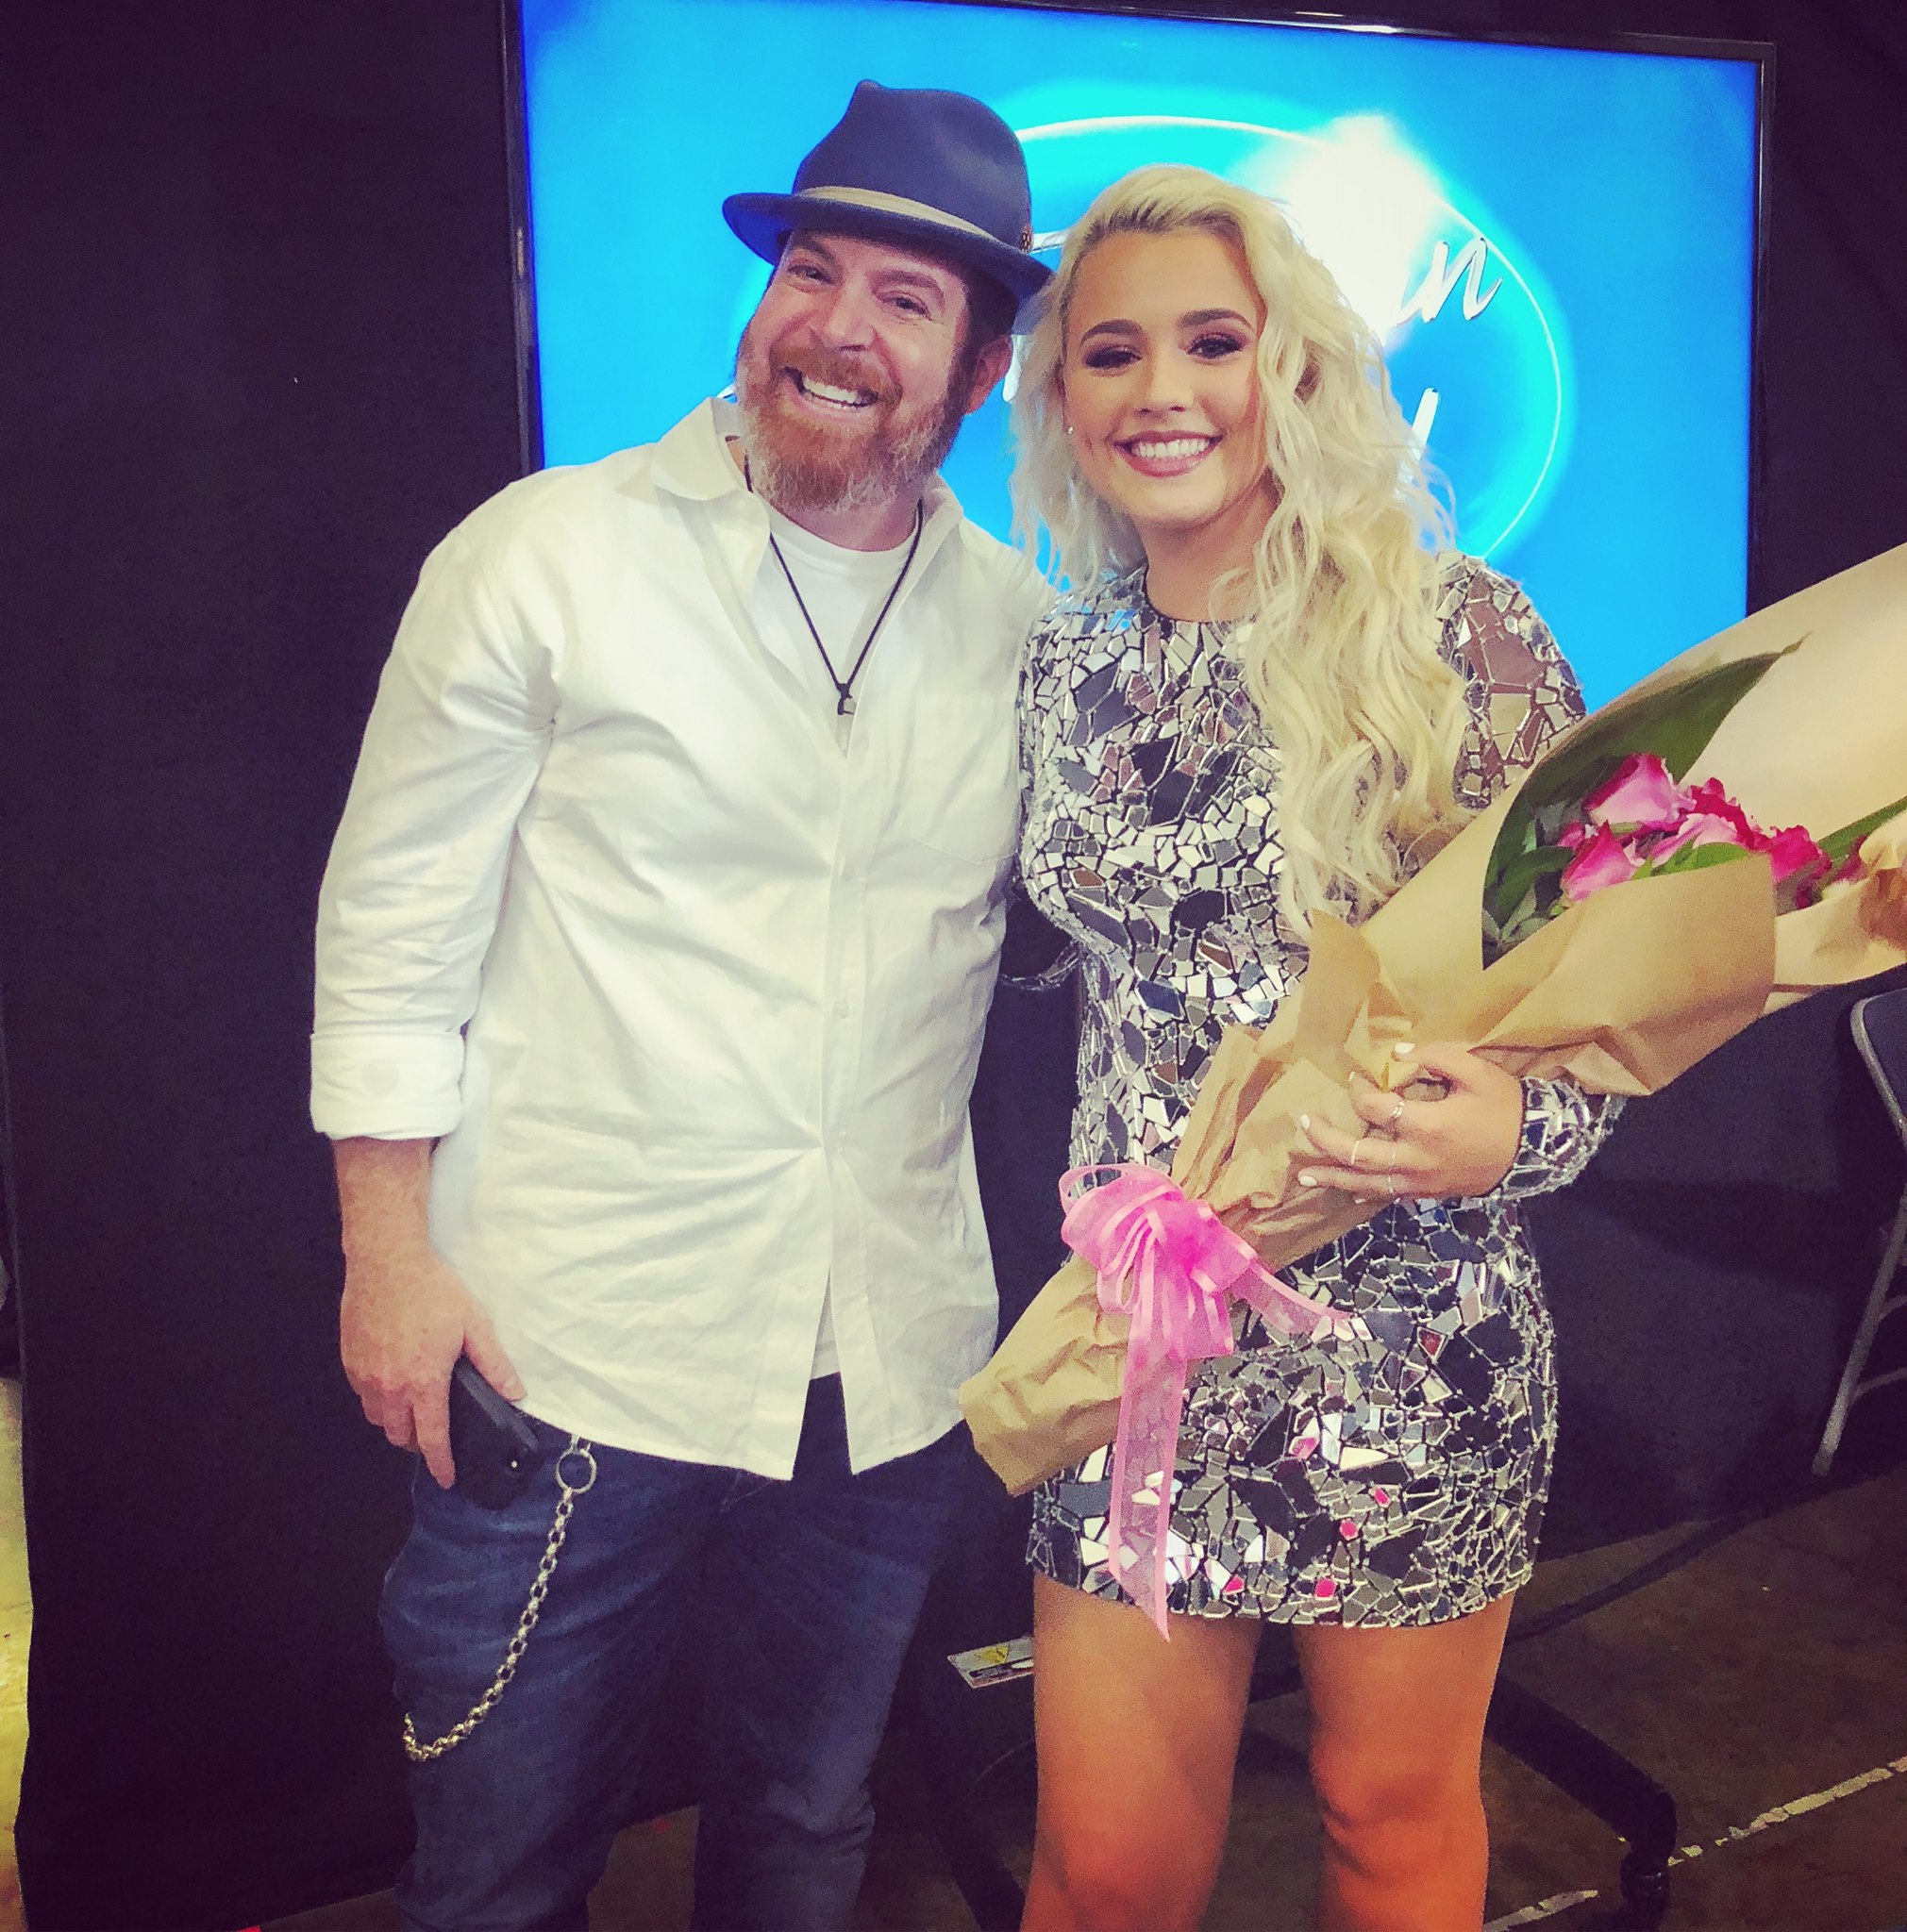 Gabby Barrett backstage at American Idol on May 20, 2018.
Photo credit: Doron Ofir
